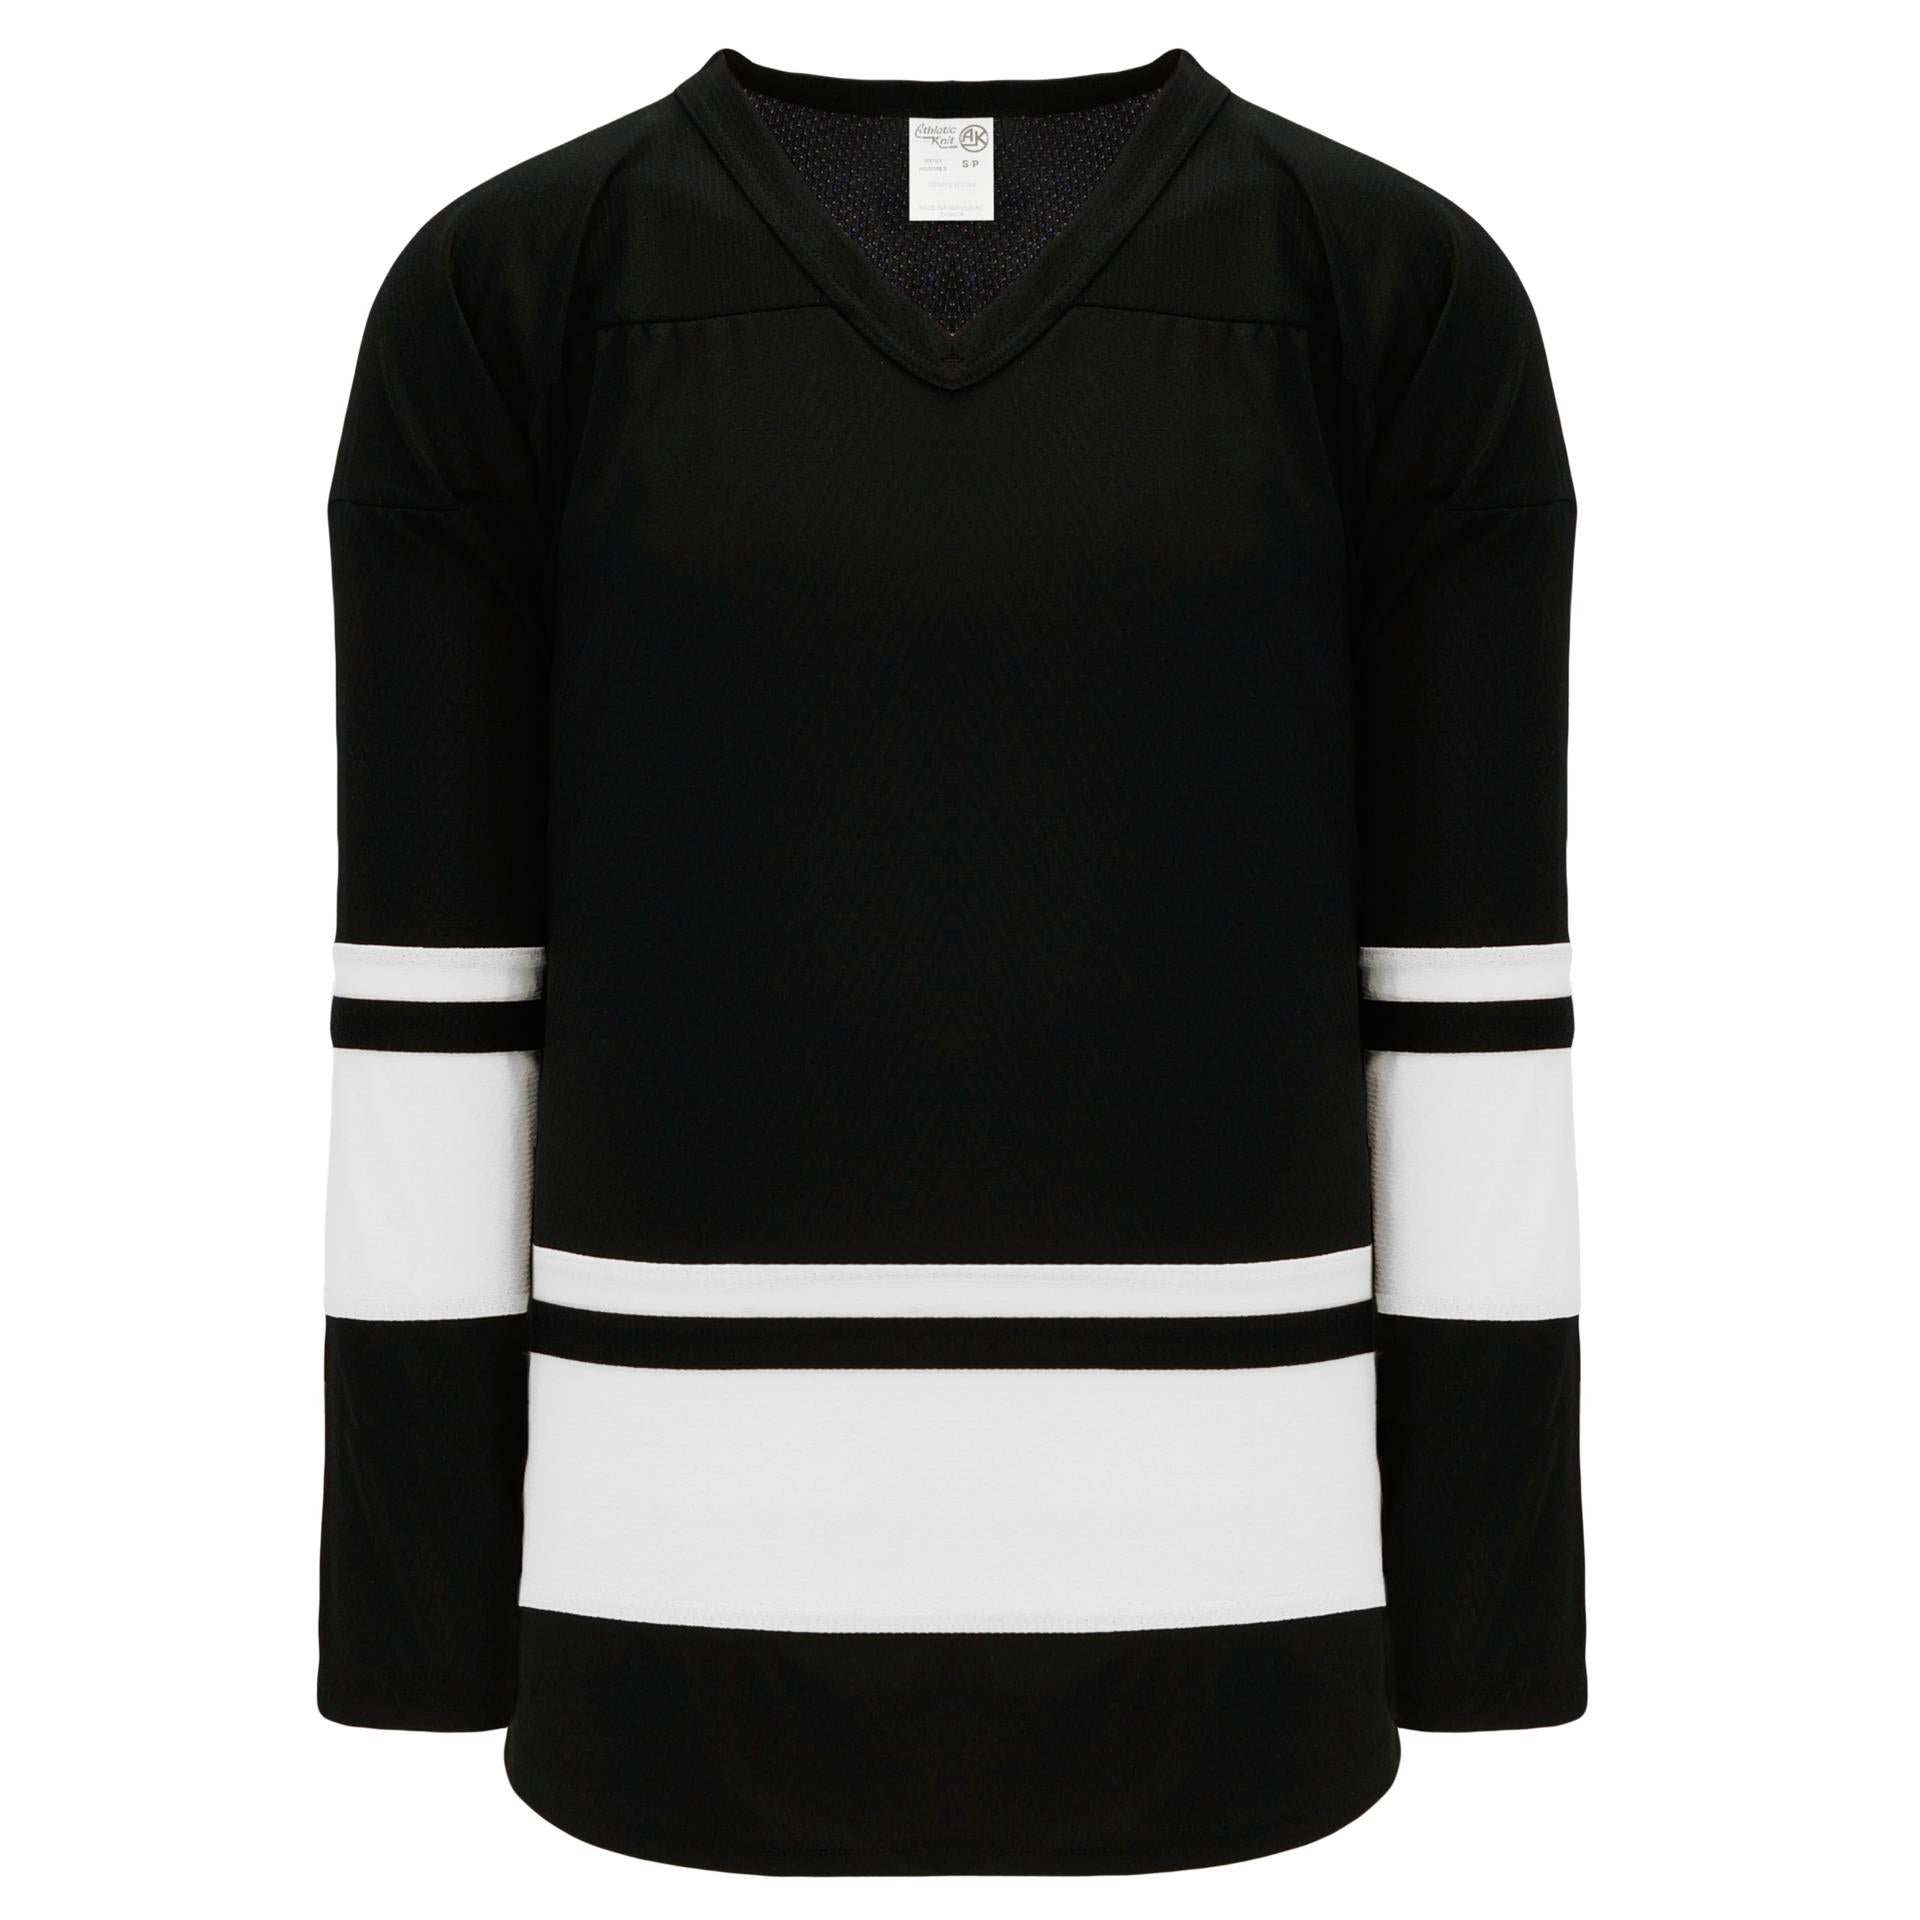 For Sale: Washington Capitals Black jersey : r/hockeyjerseys